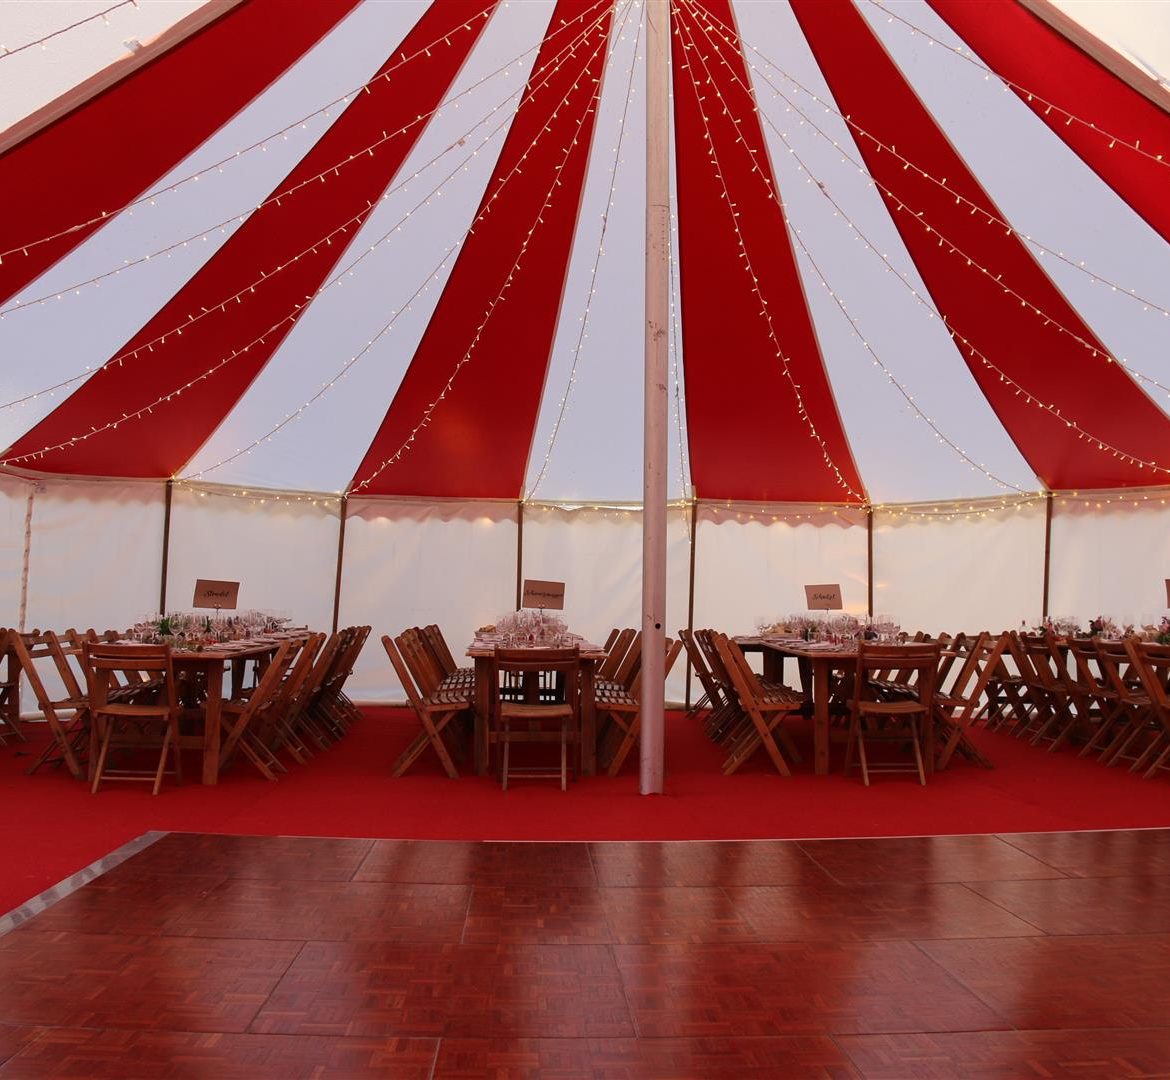 40x60ft Circus tent, white walls, parquet dancefloor